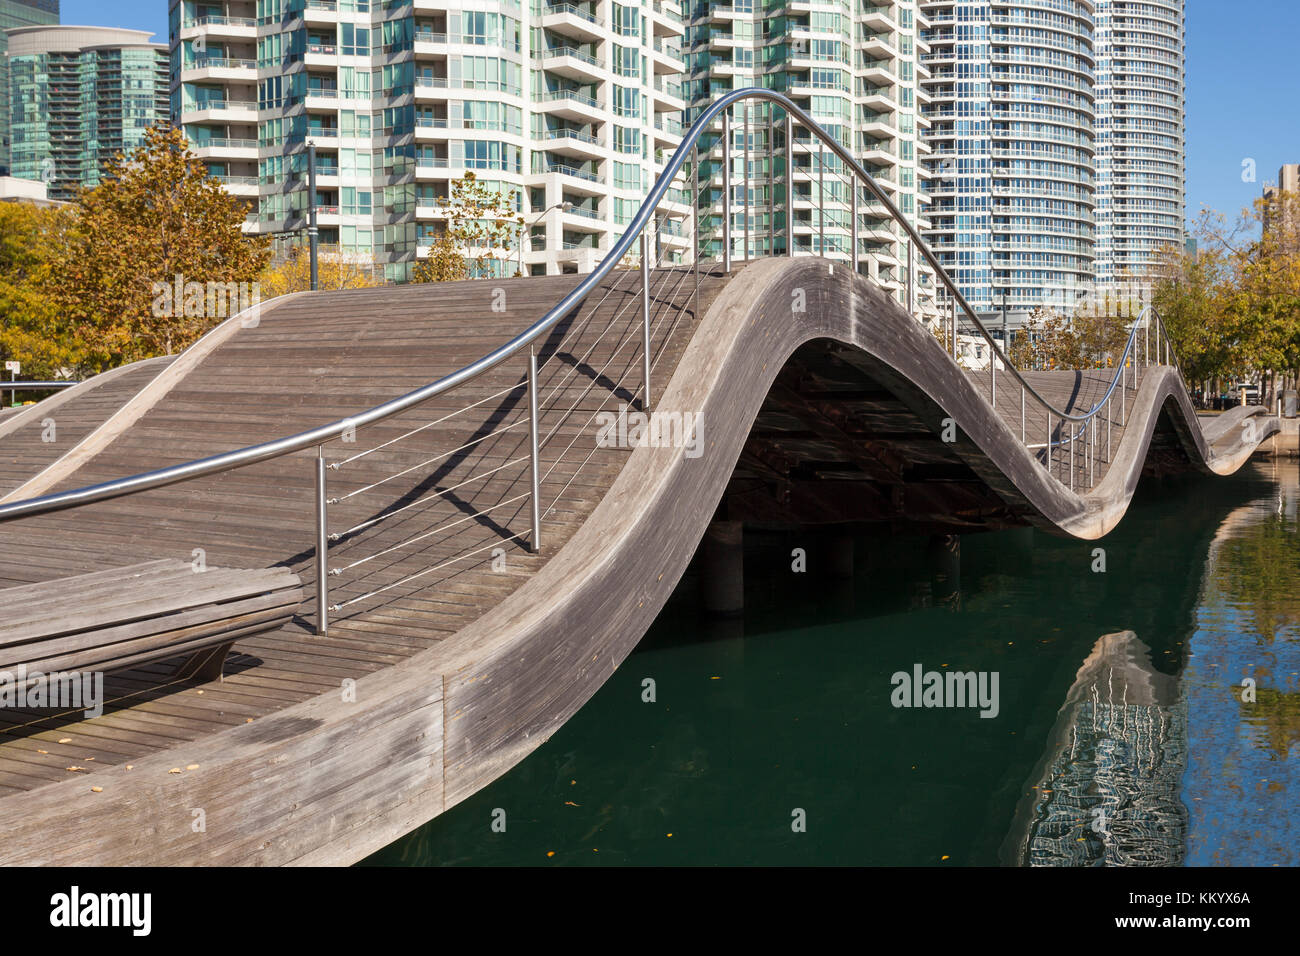 Toronto, Canada - Oct 20, 2017: The Toronto Waterfront Wavedecks - a wave shaped pedestrian bridge at the waterfront promenade in Toronto, Canada Stock Photo